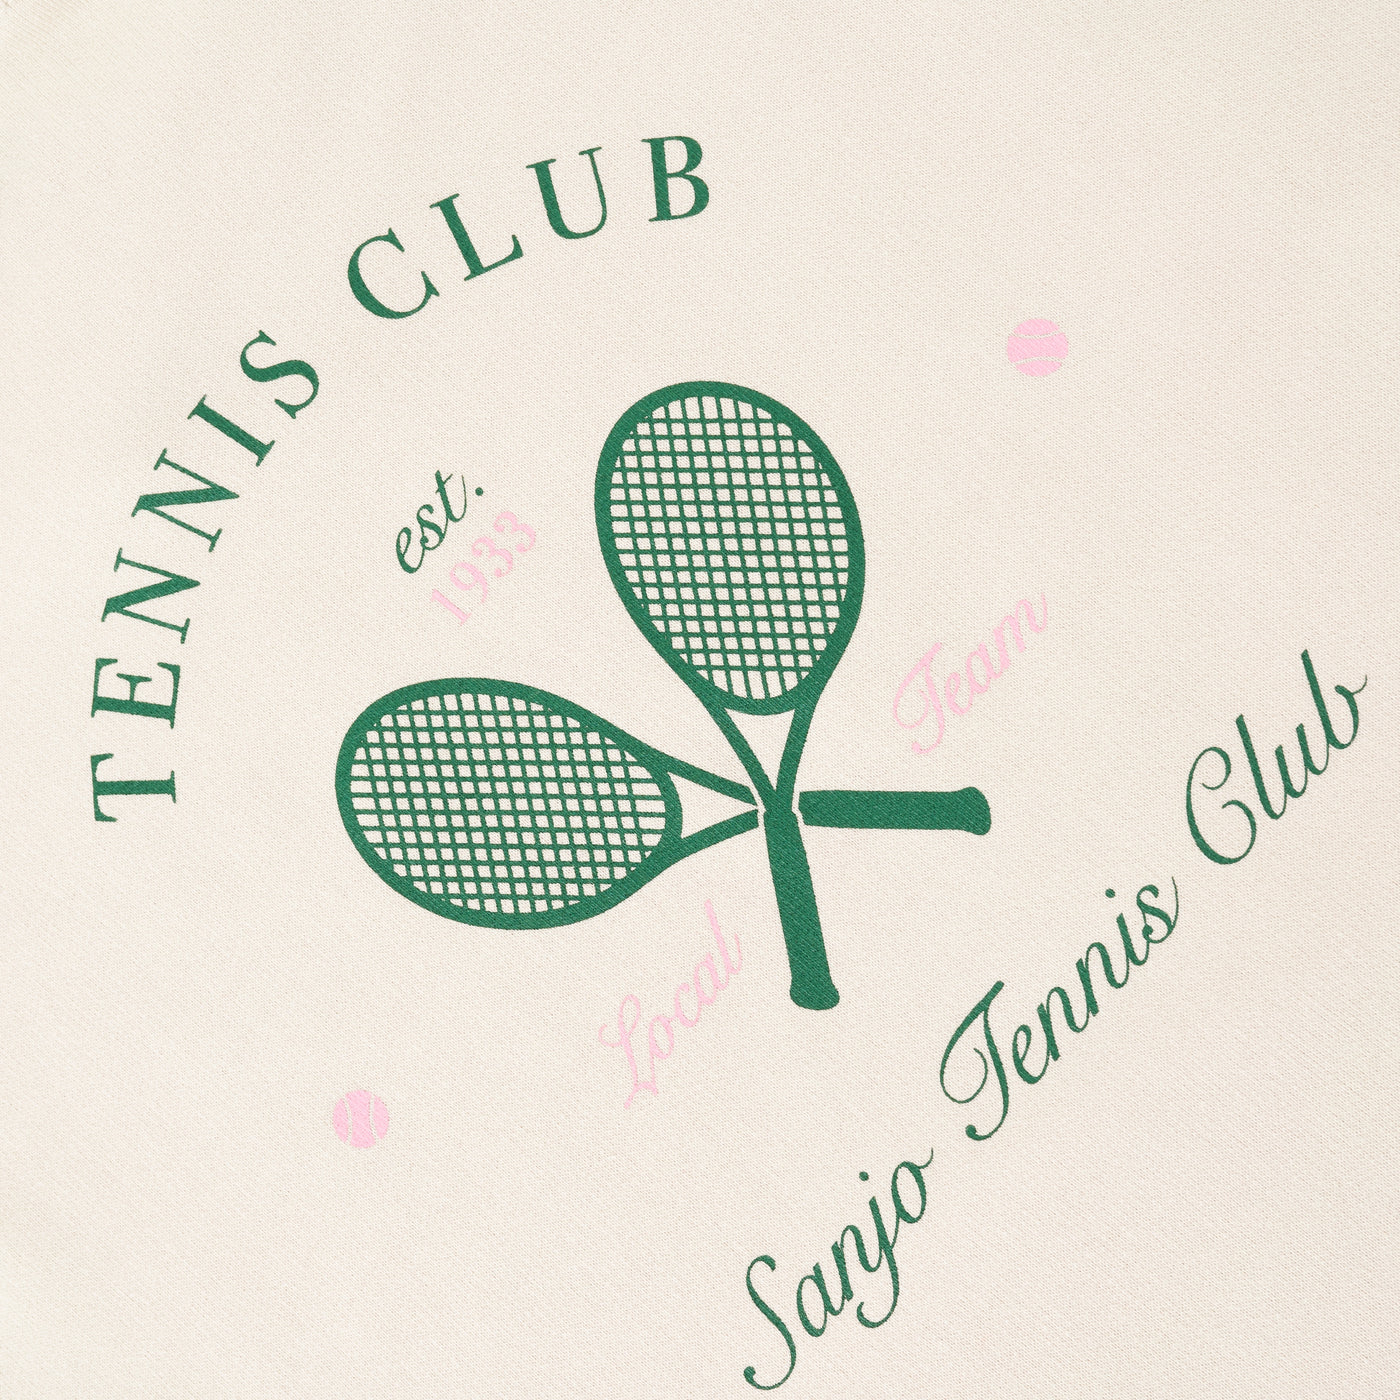 Sanjo Tennis Club Sweat // Ecru